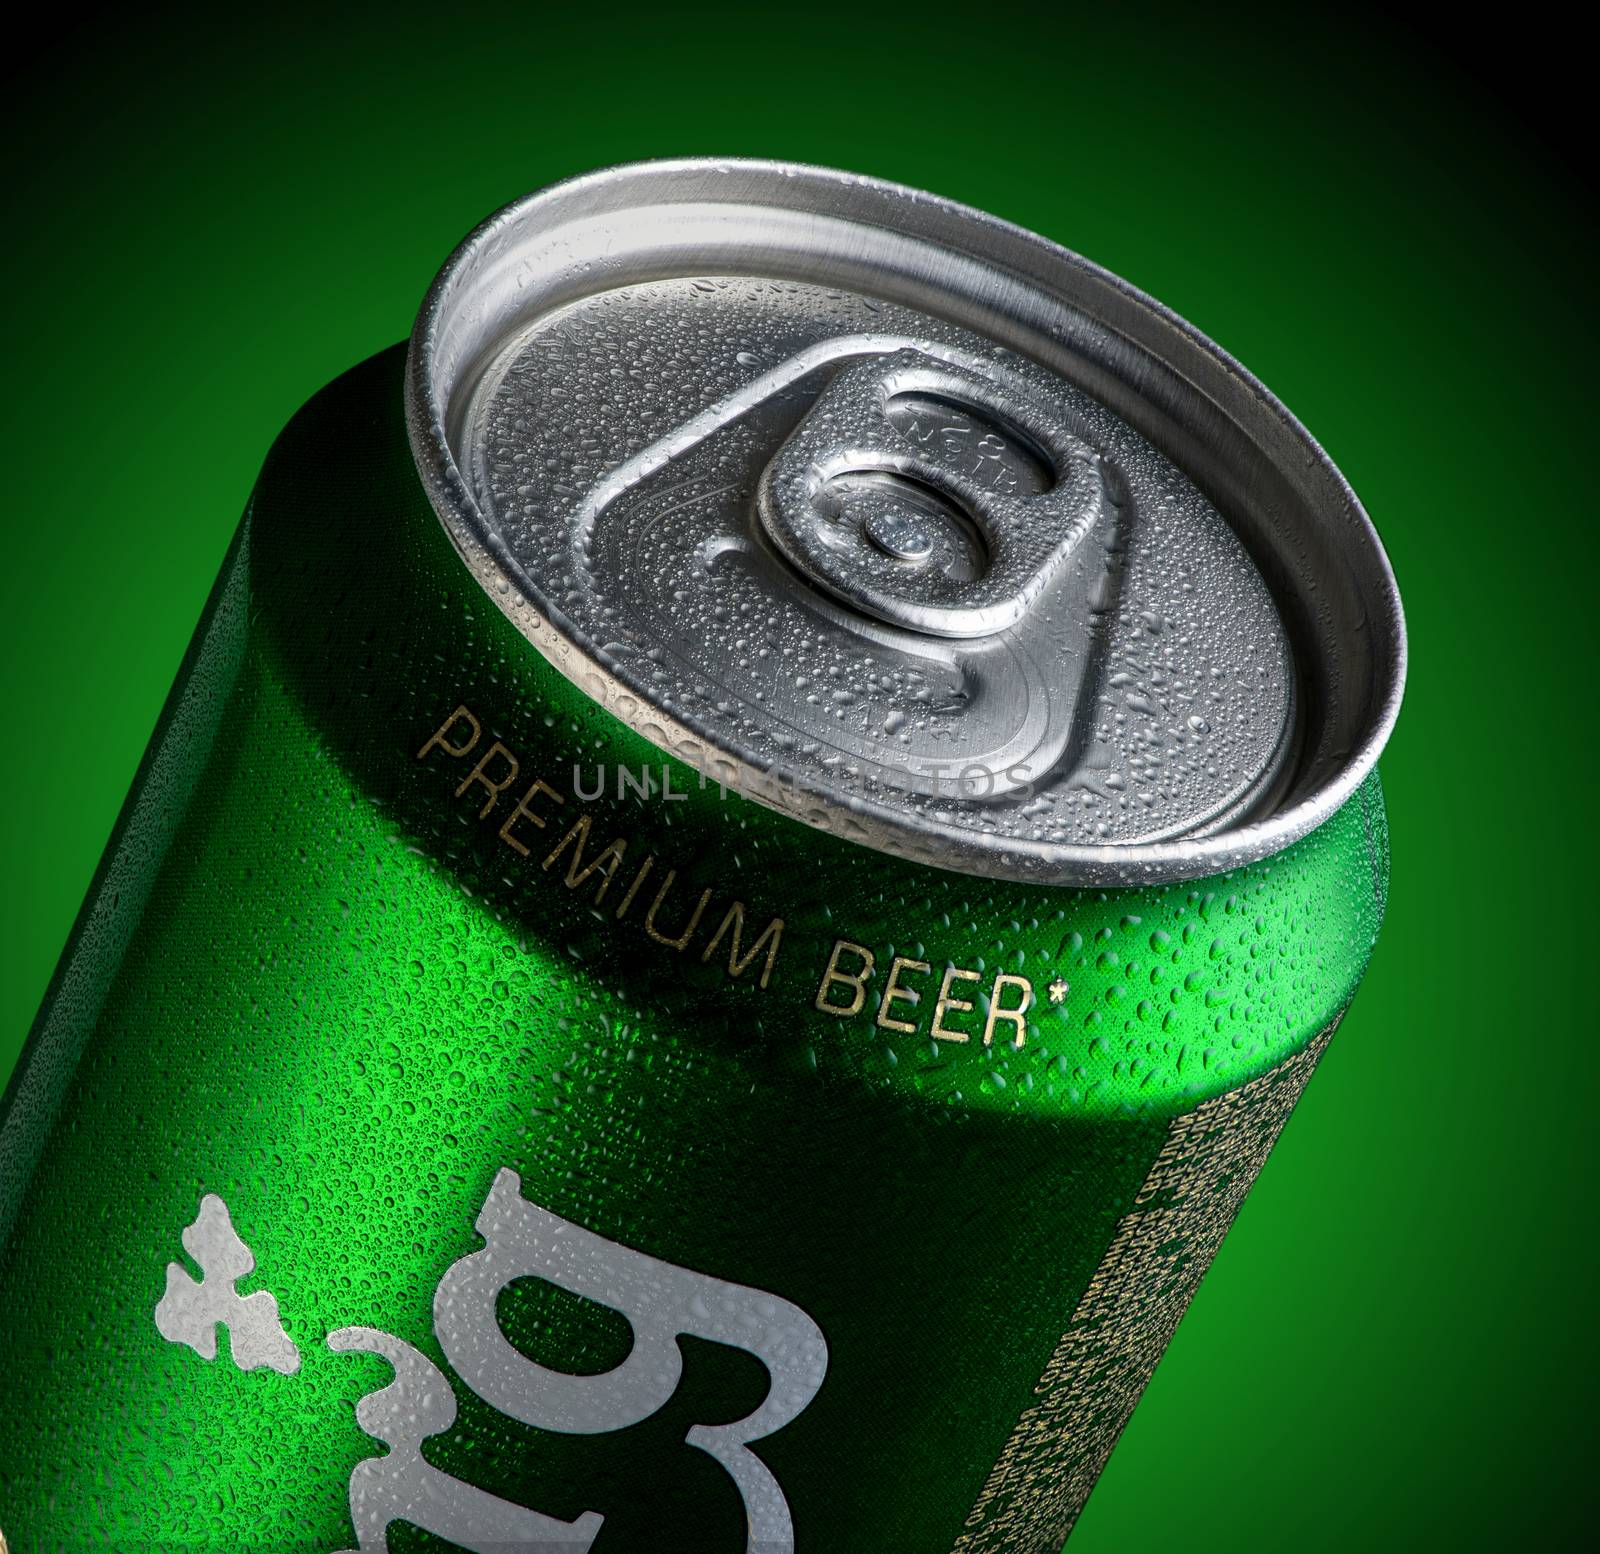 a can of Carlsberg beer by A_Karim